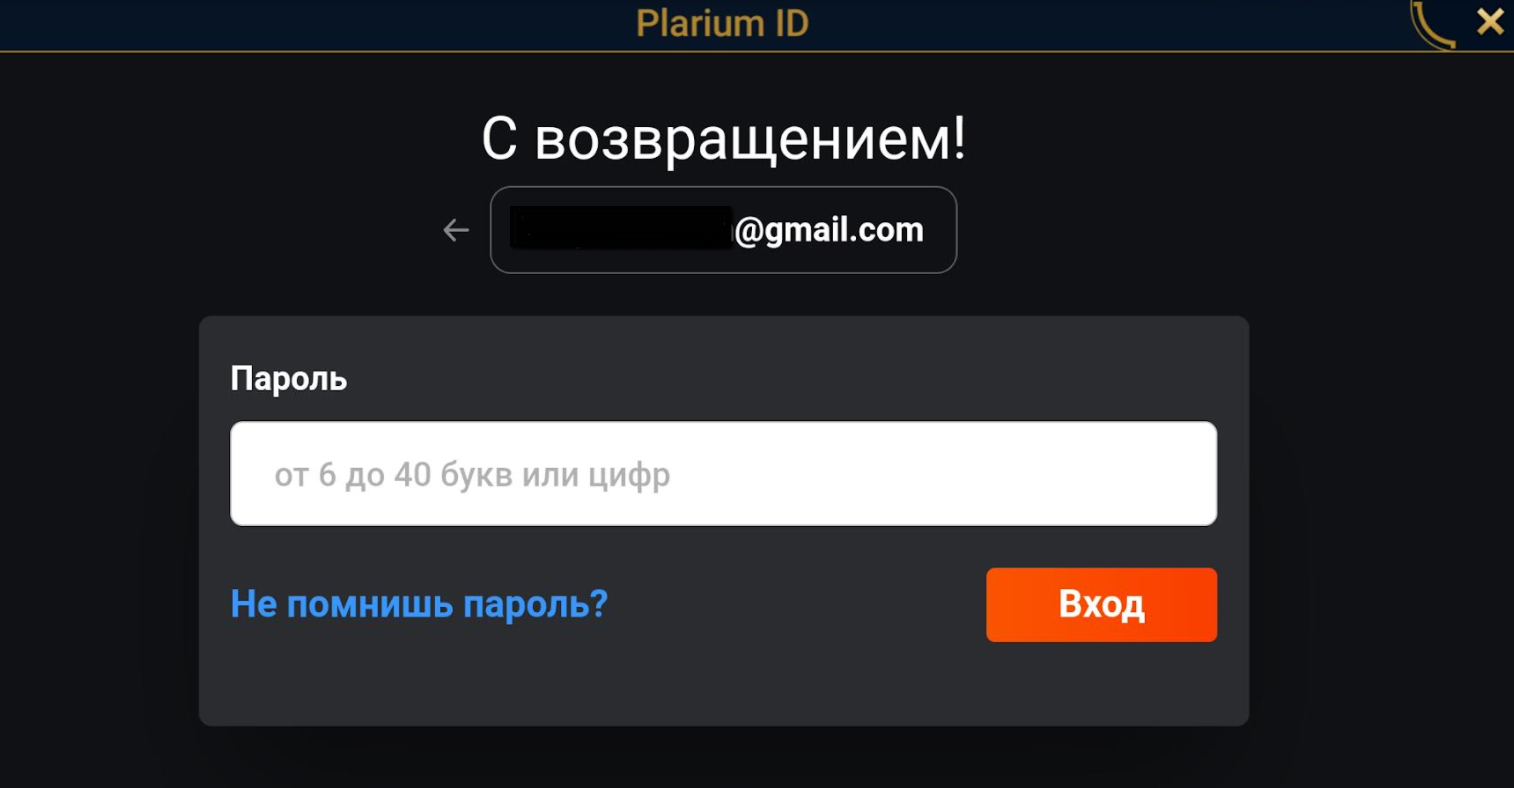 Russian_PLID_login_Enter_password.png